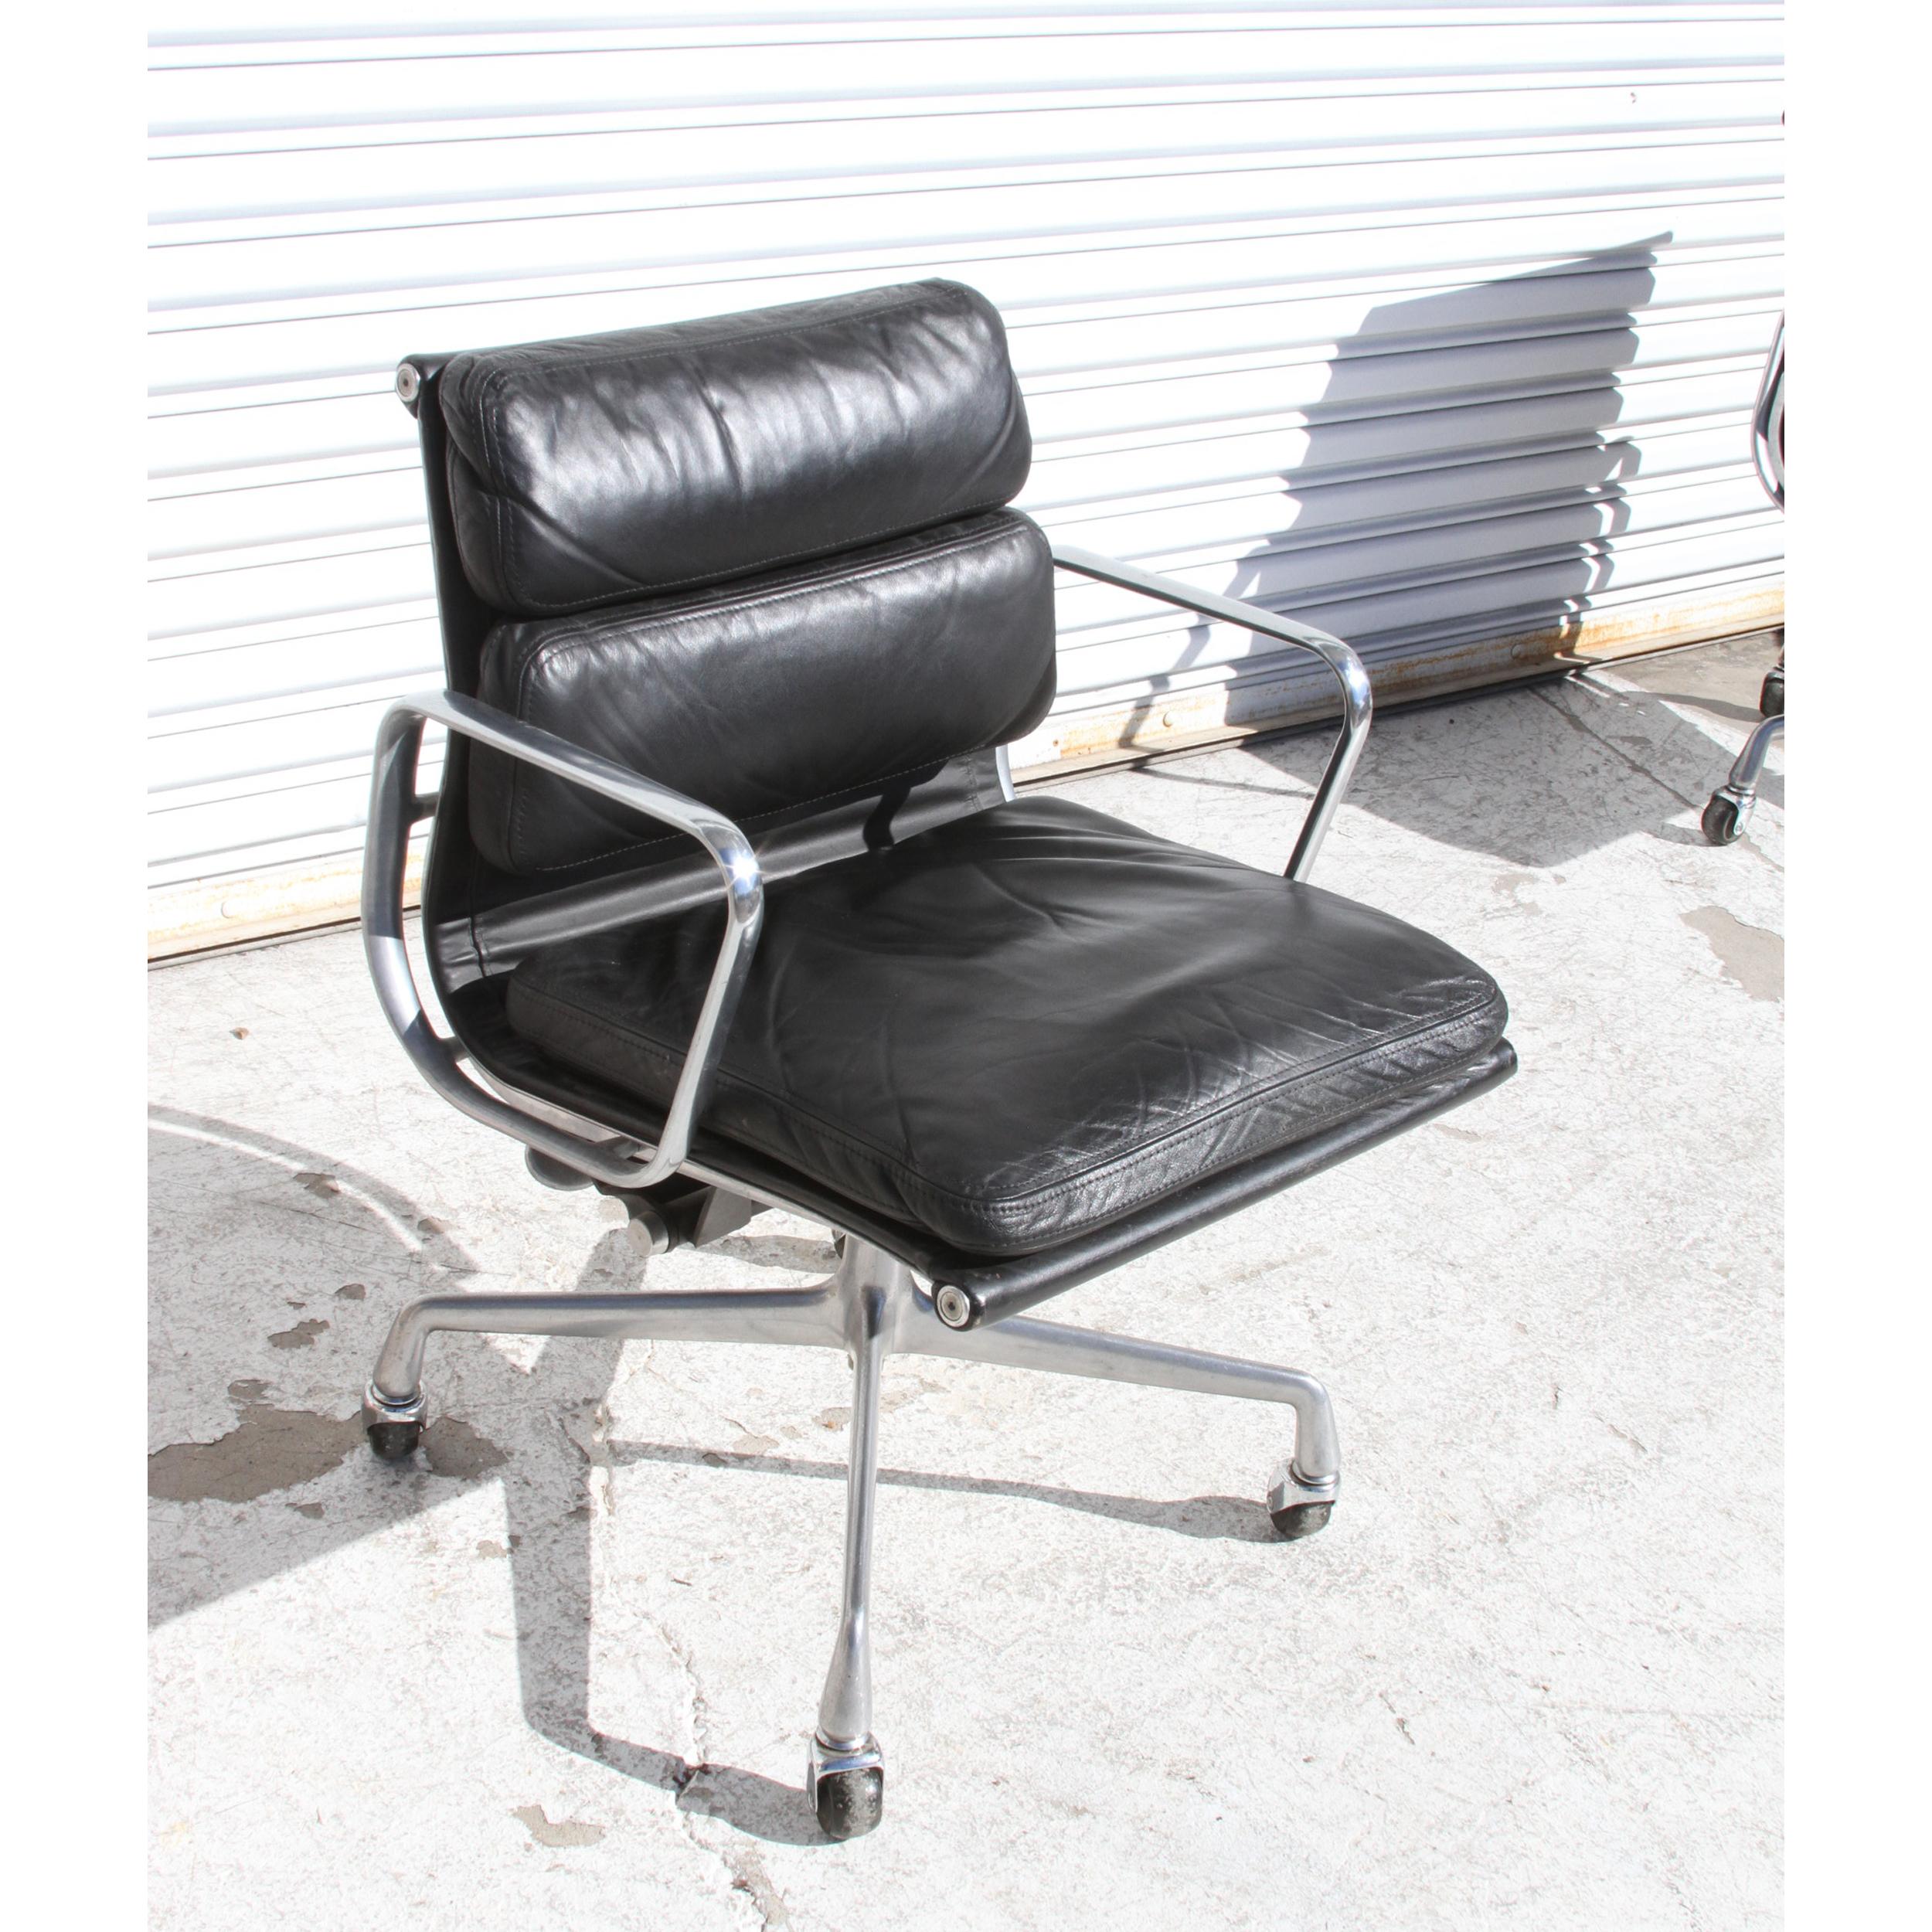 Sillas Herman Miller soft pad 
Charles and Ray Eames diseñador 
Su colección Soft Pad de sillas lujosamente acolchadas evolucionó a partir de su colección Aluminum Group. Con cojín de asiento de felpa añadido, con base de aluminio de 4 estrellas con